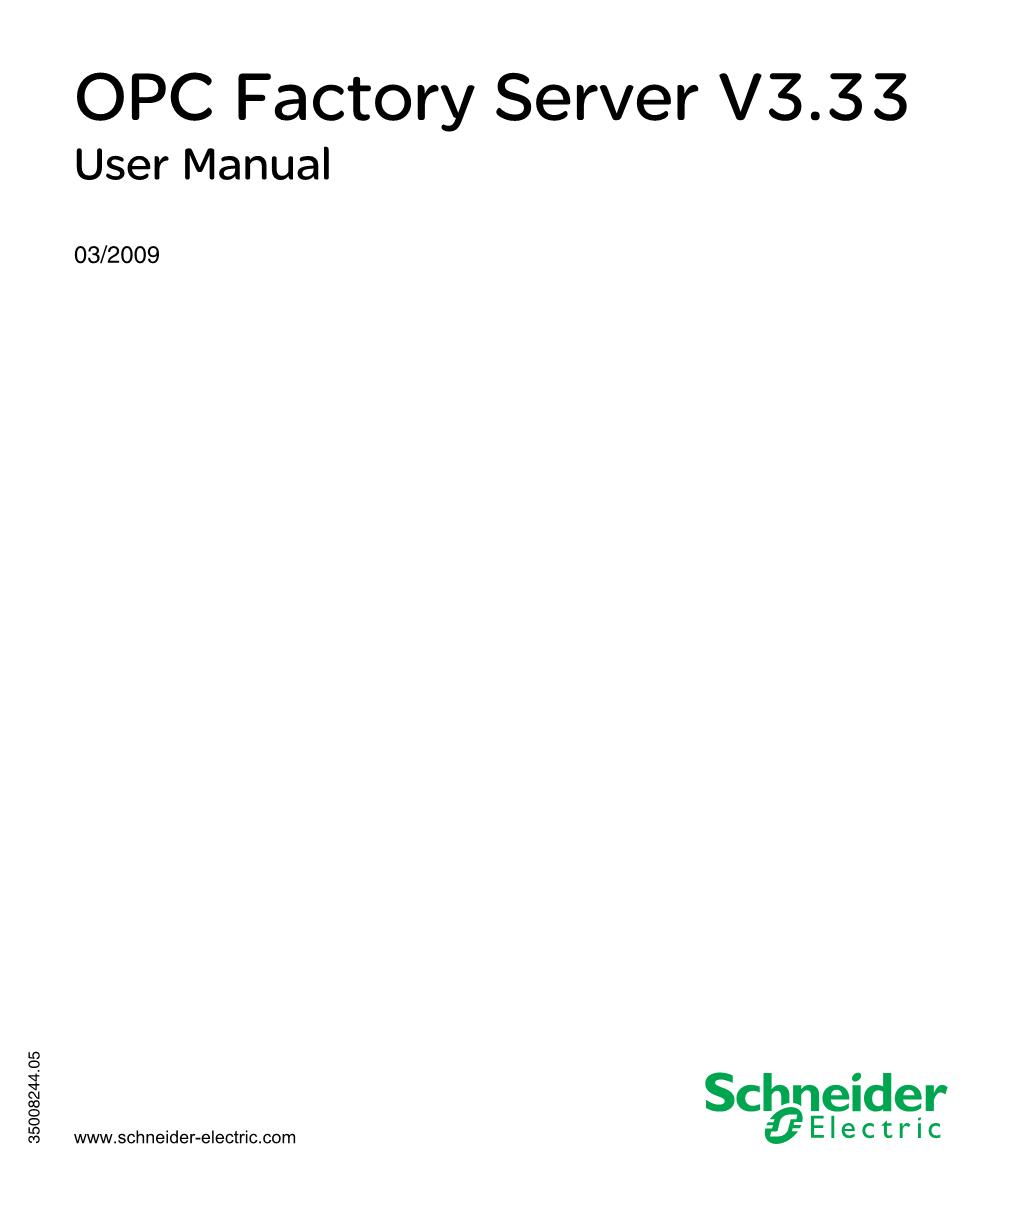 OPC Factory Server V3.33